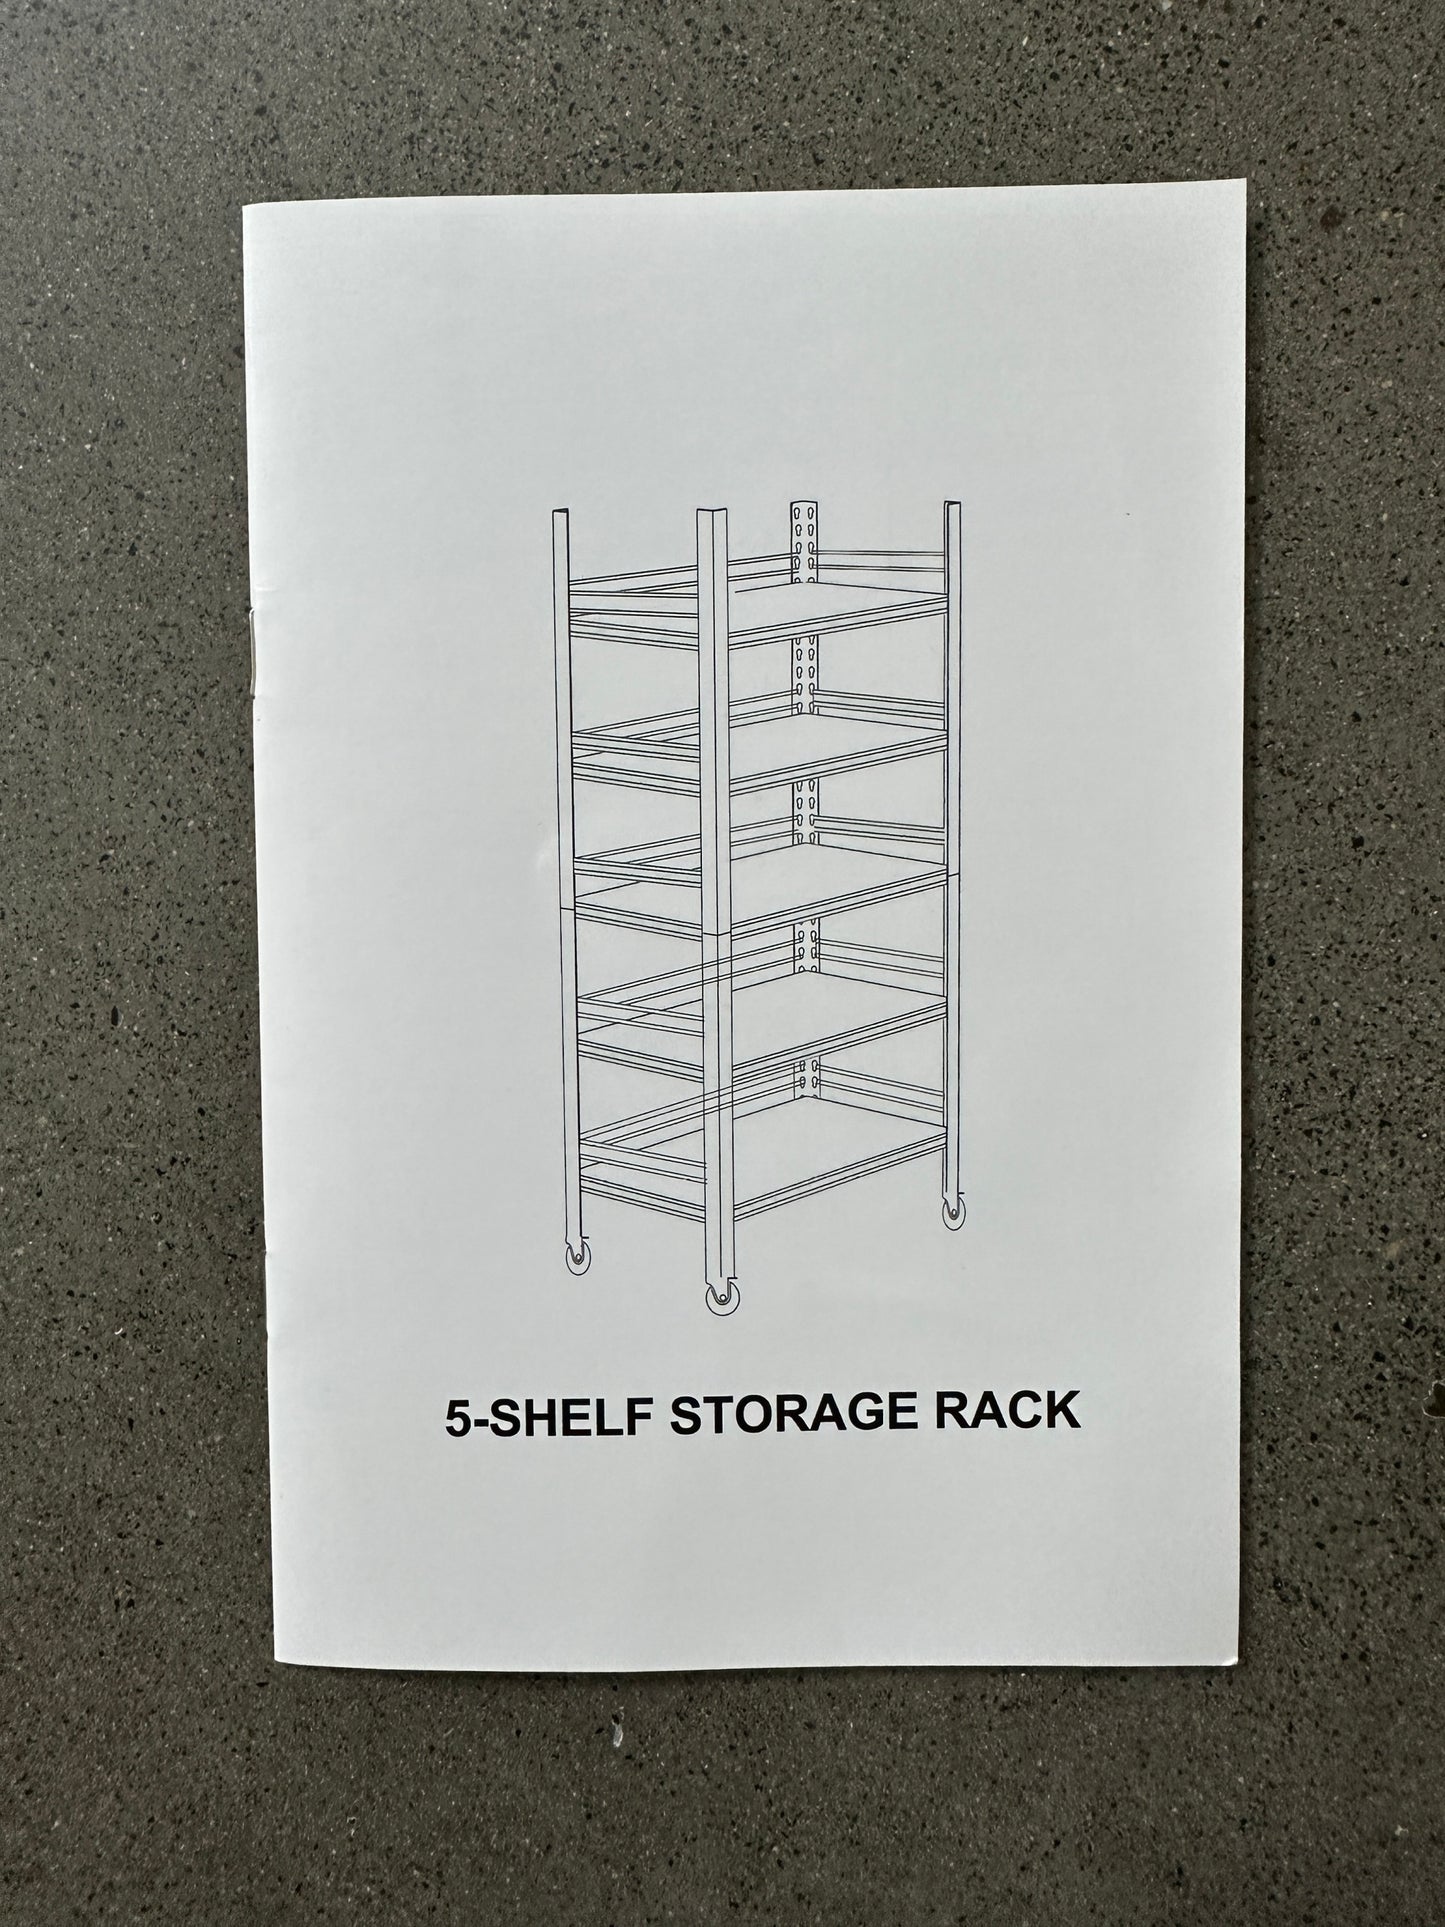 63"H Storage Shelves - Heavy Duty Metal Shelving Unit Adjustable 5-Tier Pantry Shelves with Wheels Load 1750LBS Kitchen Shelf Garage Storage